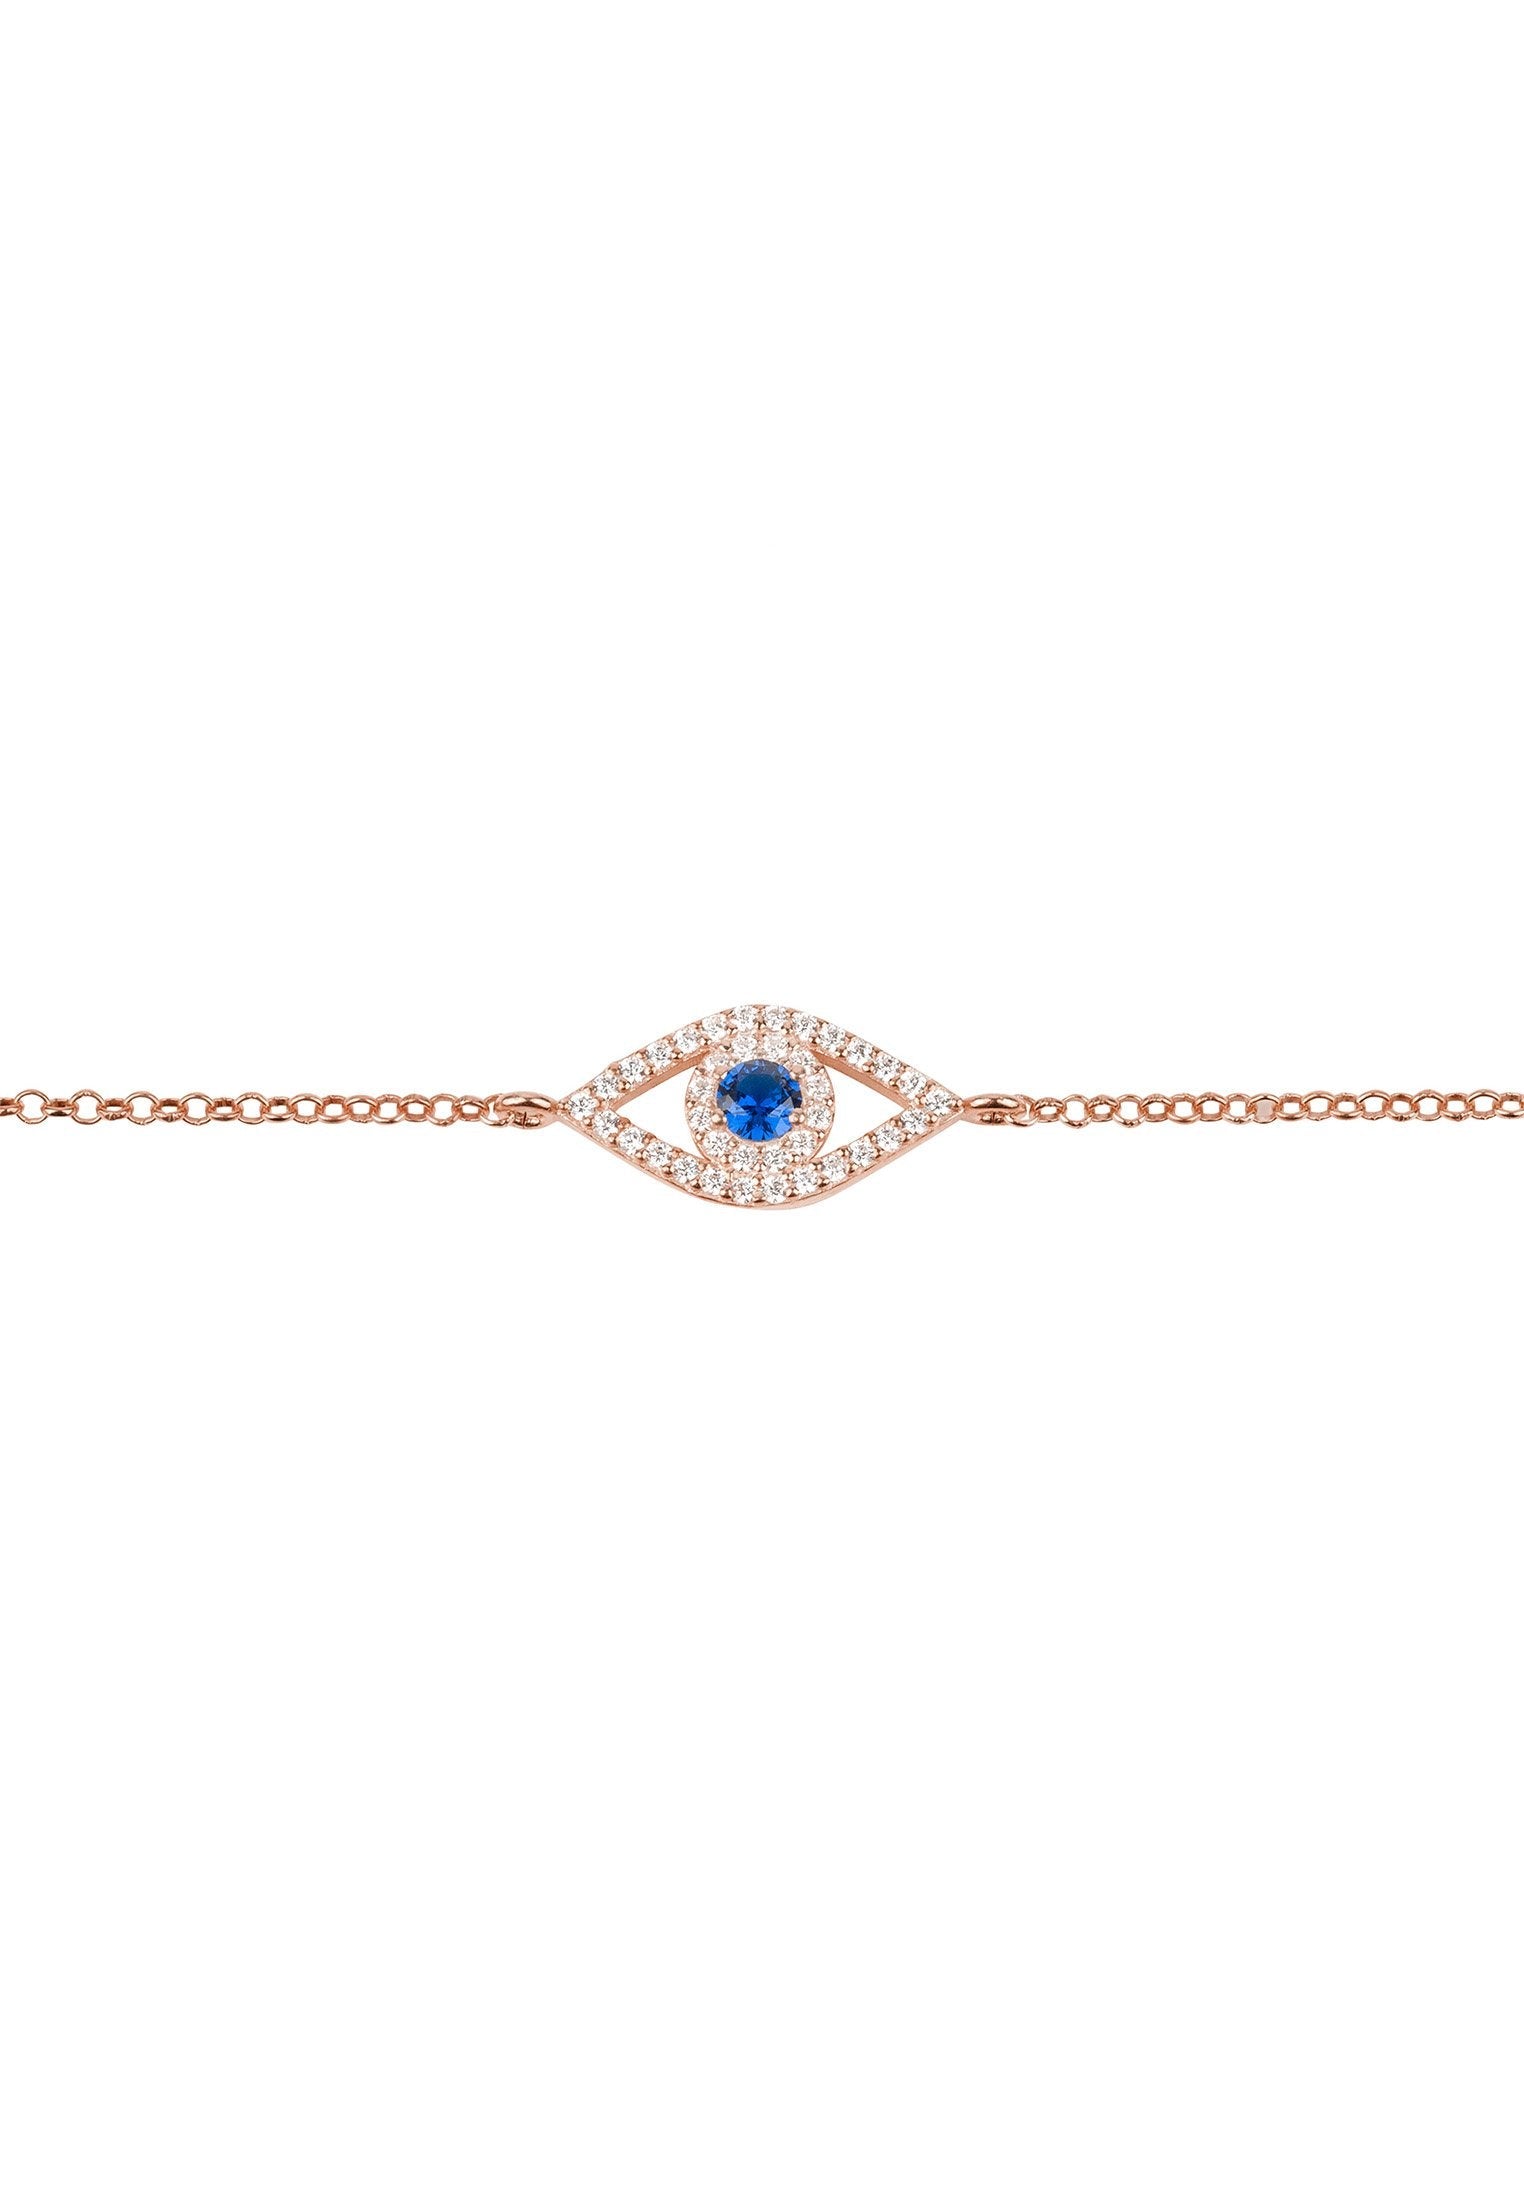 Blue Evil Eye Elliptical Bracelet with Rosegold Charm and Cubic Zirconia - 16-20cm Length Bijou Her